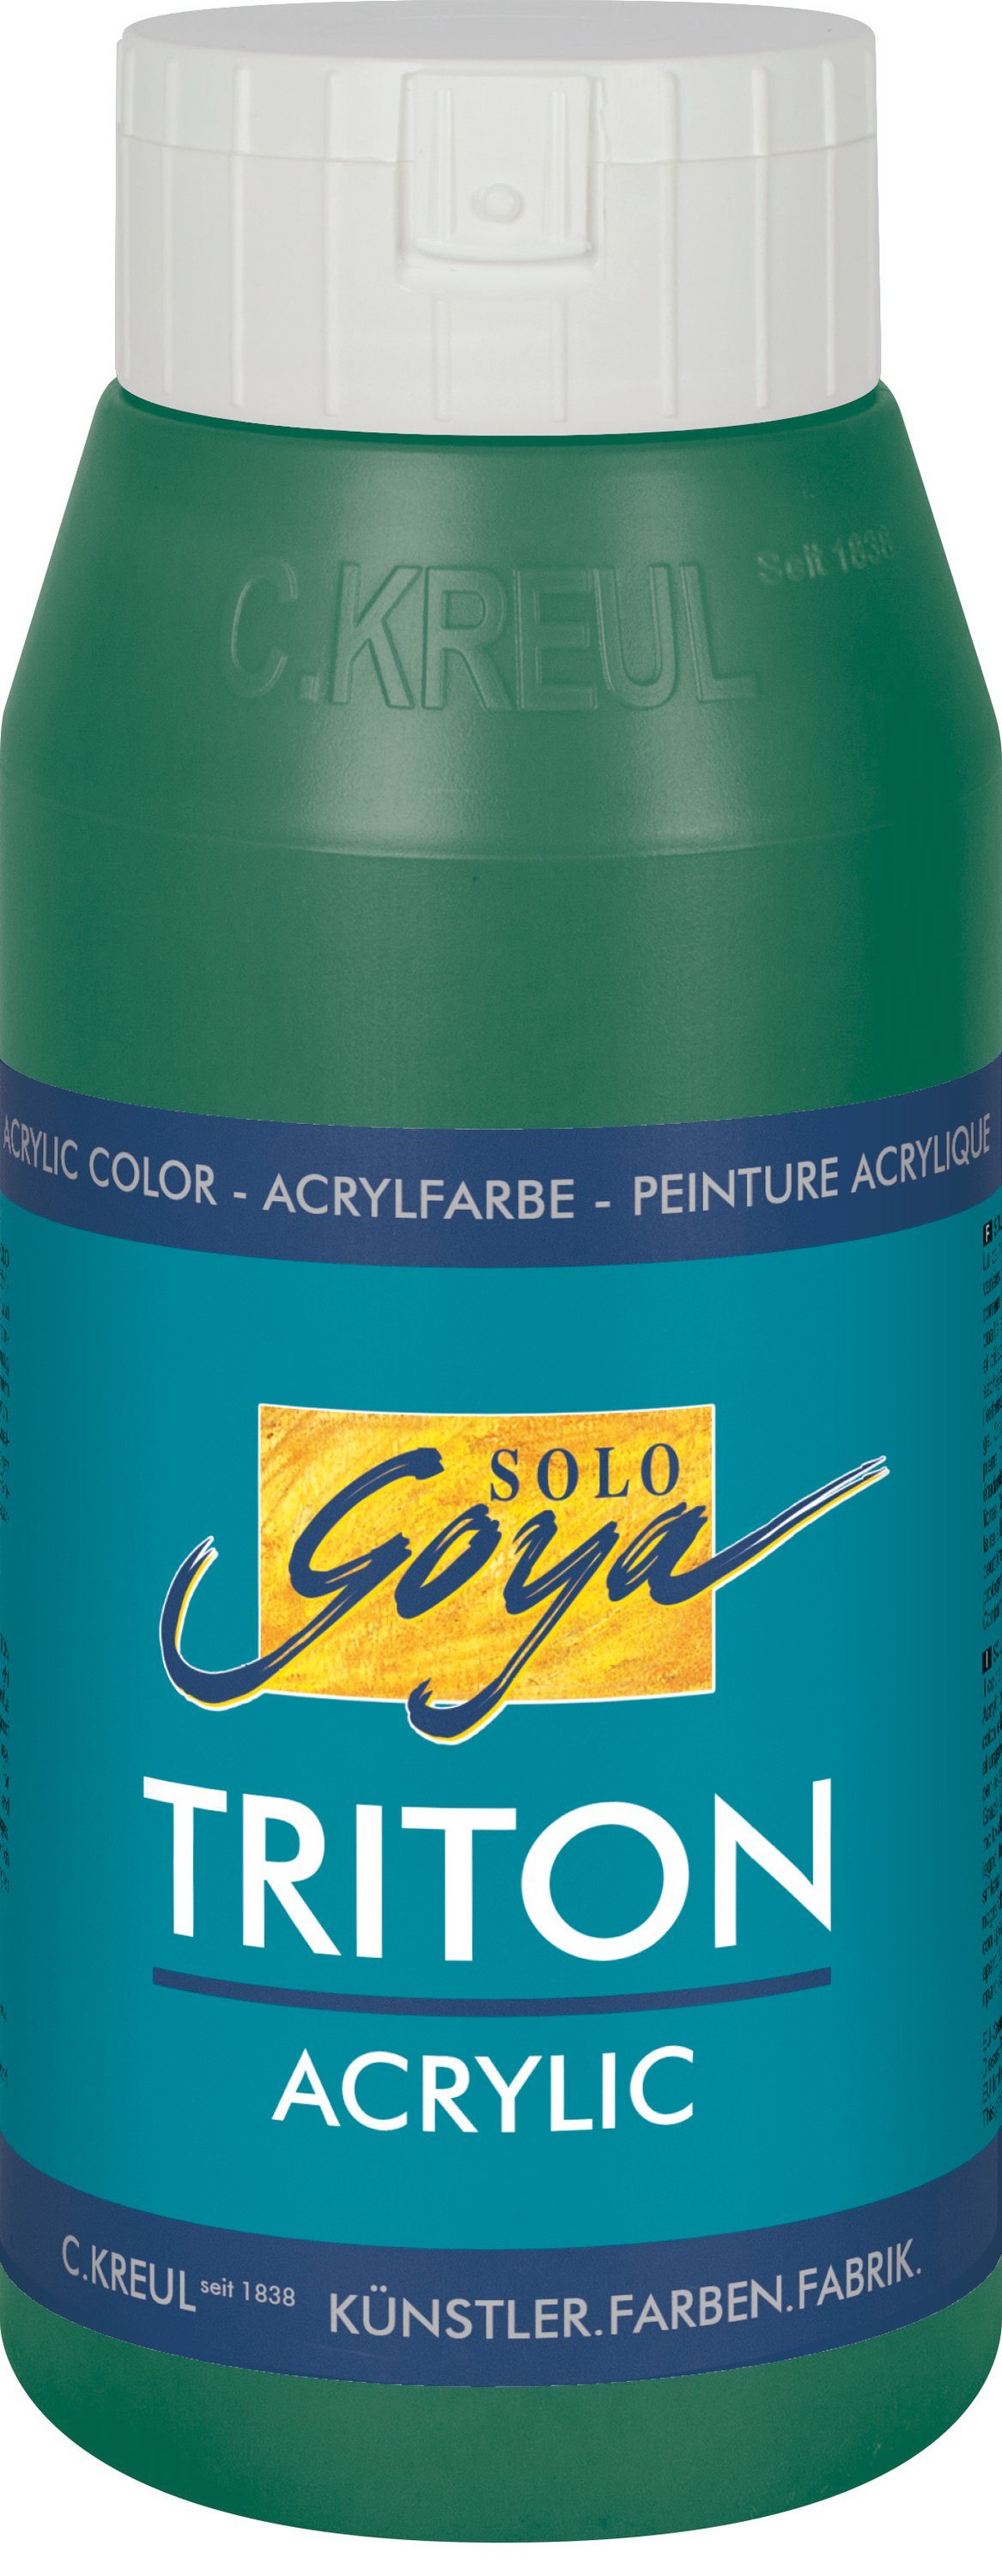 Kreul Acrylfarbe Goya Acrylic, Dunkelgrün Solo 750 Triton ml